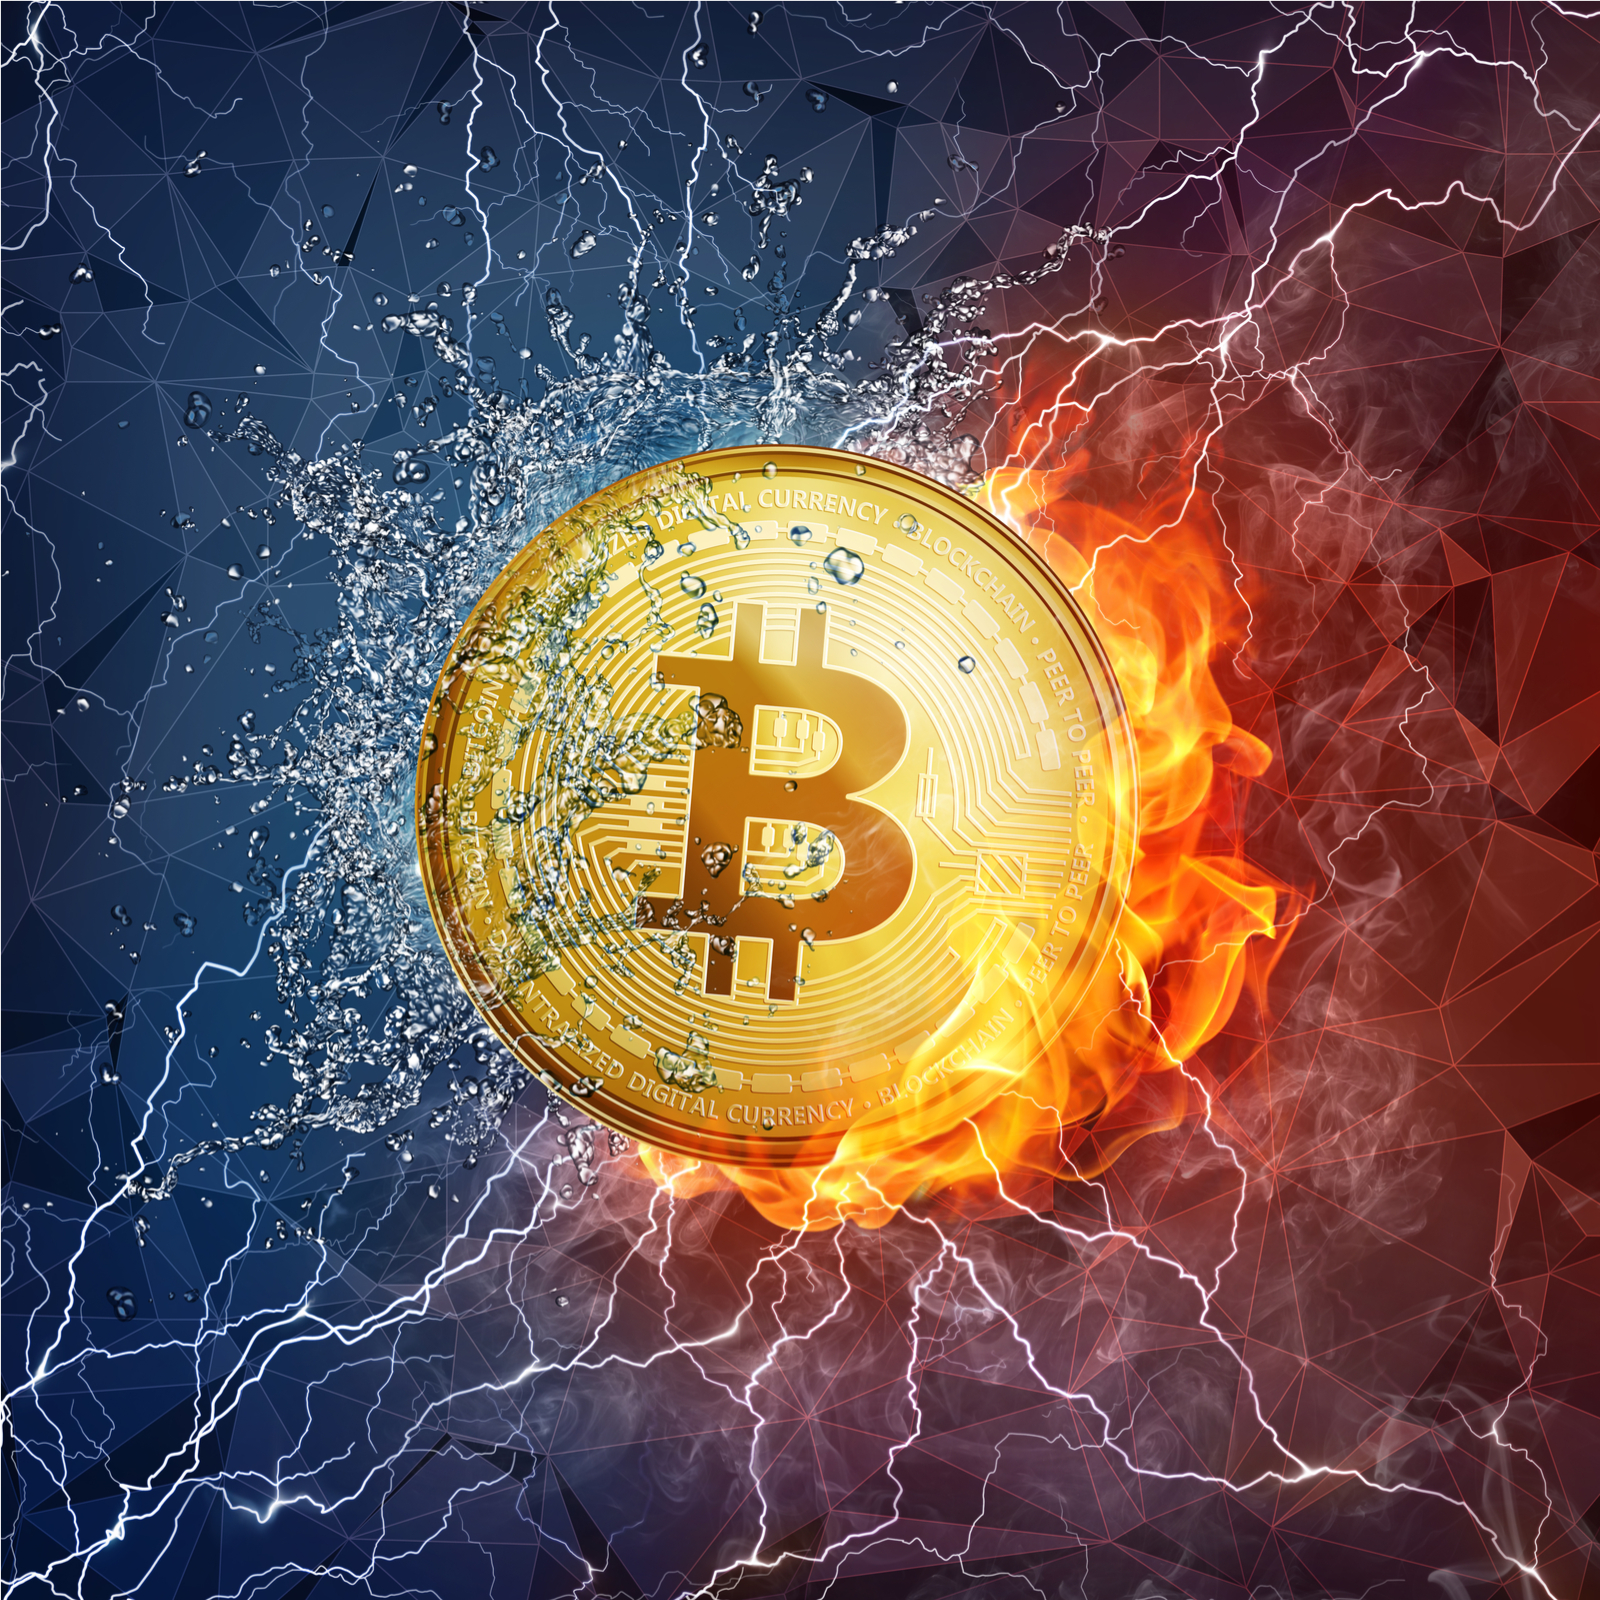 bitcoin lightning